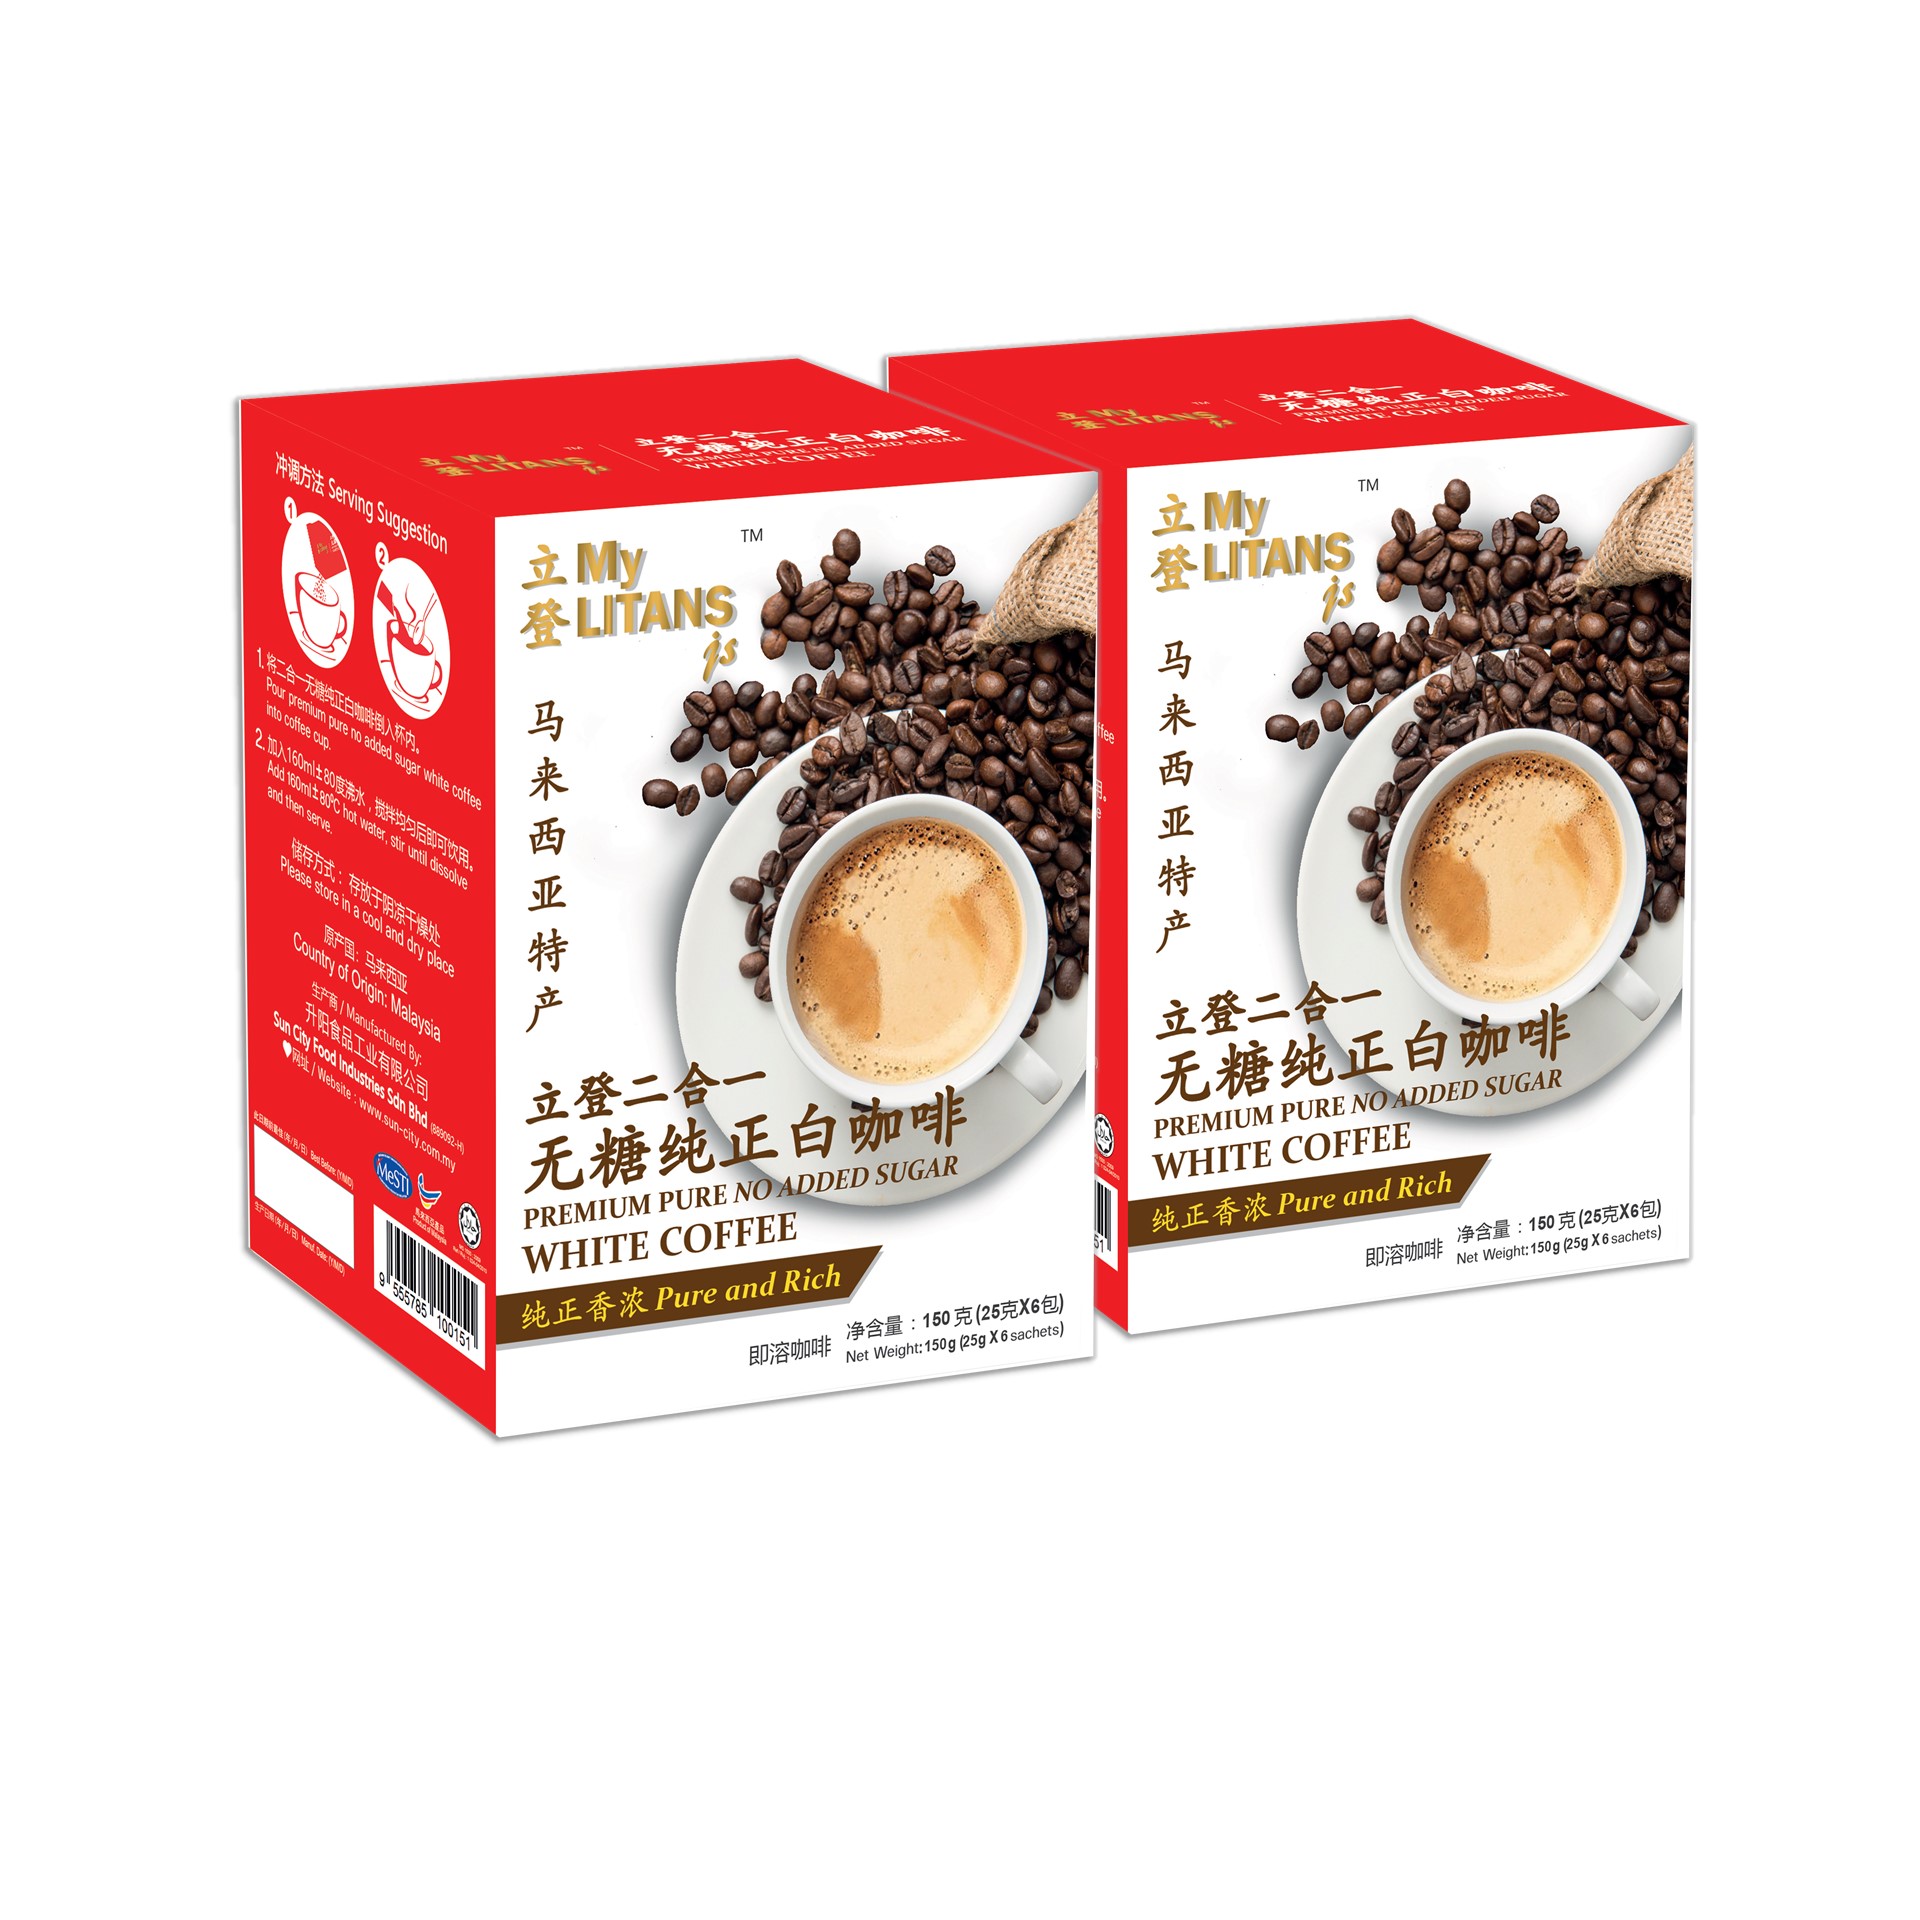 MyLITANSjs Premium Pure White Coffee No Added Sugar [2 boxes] (25 g x 6 sachets)